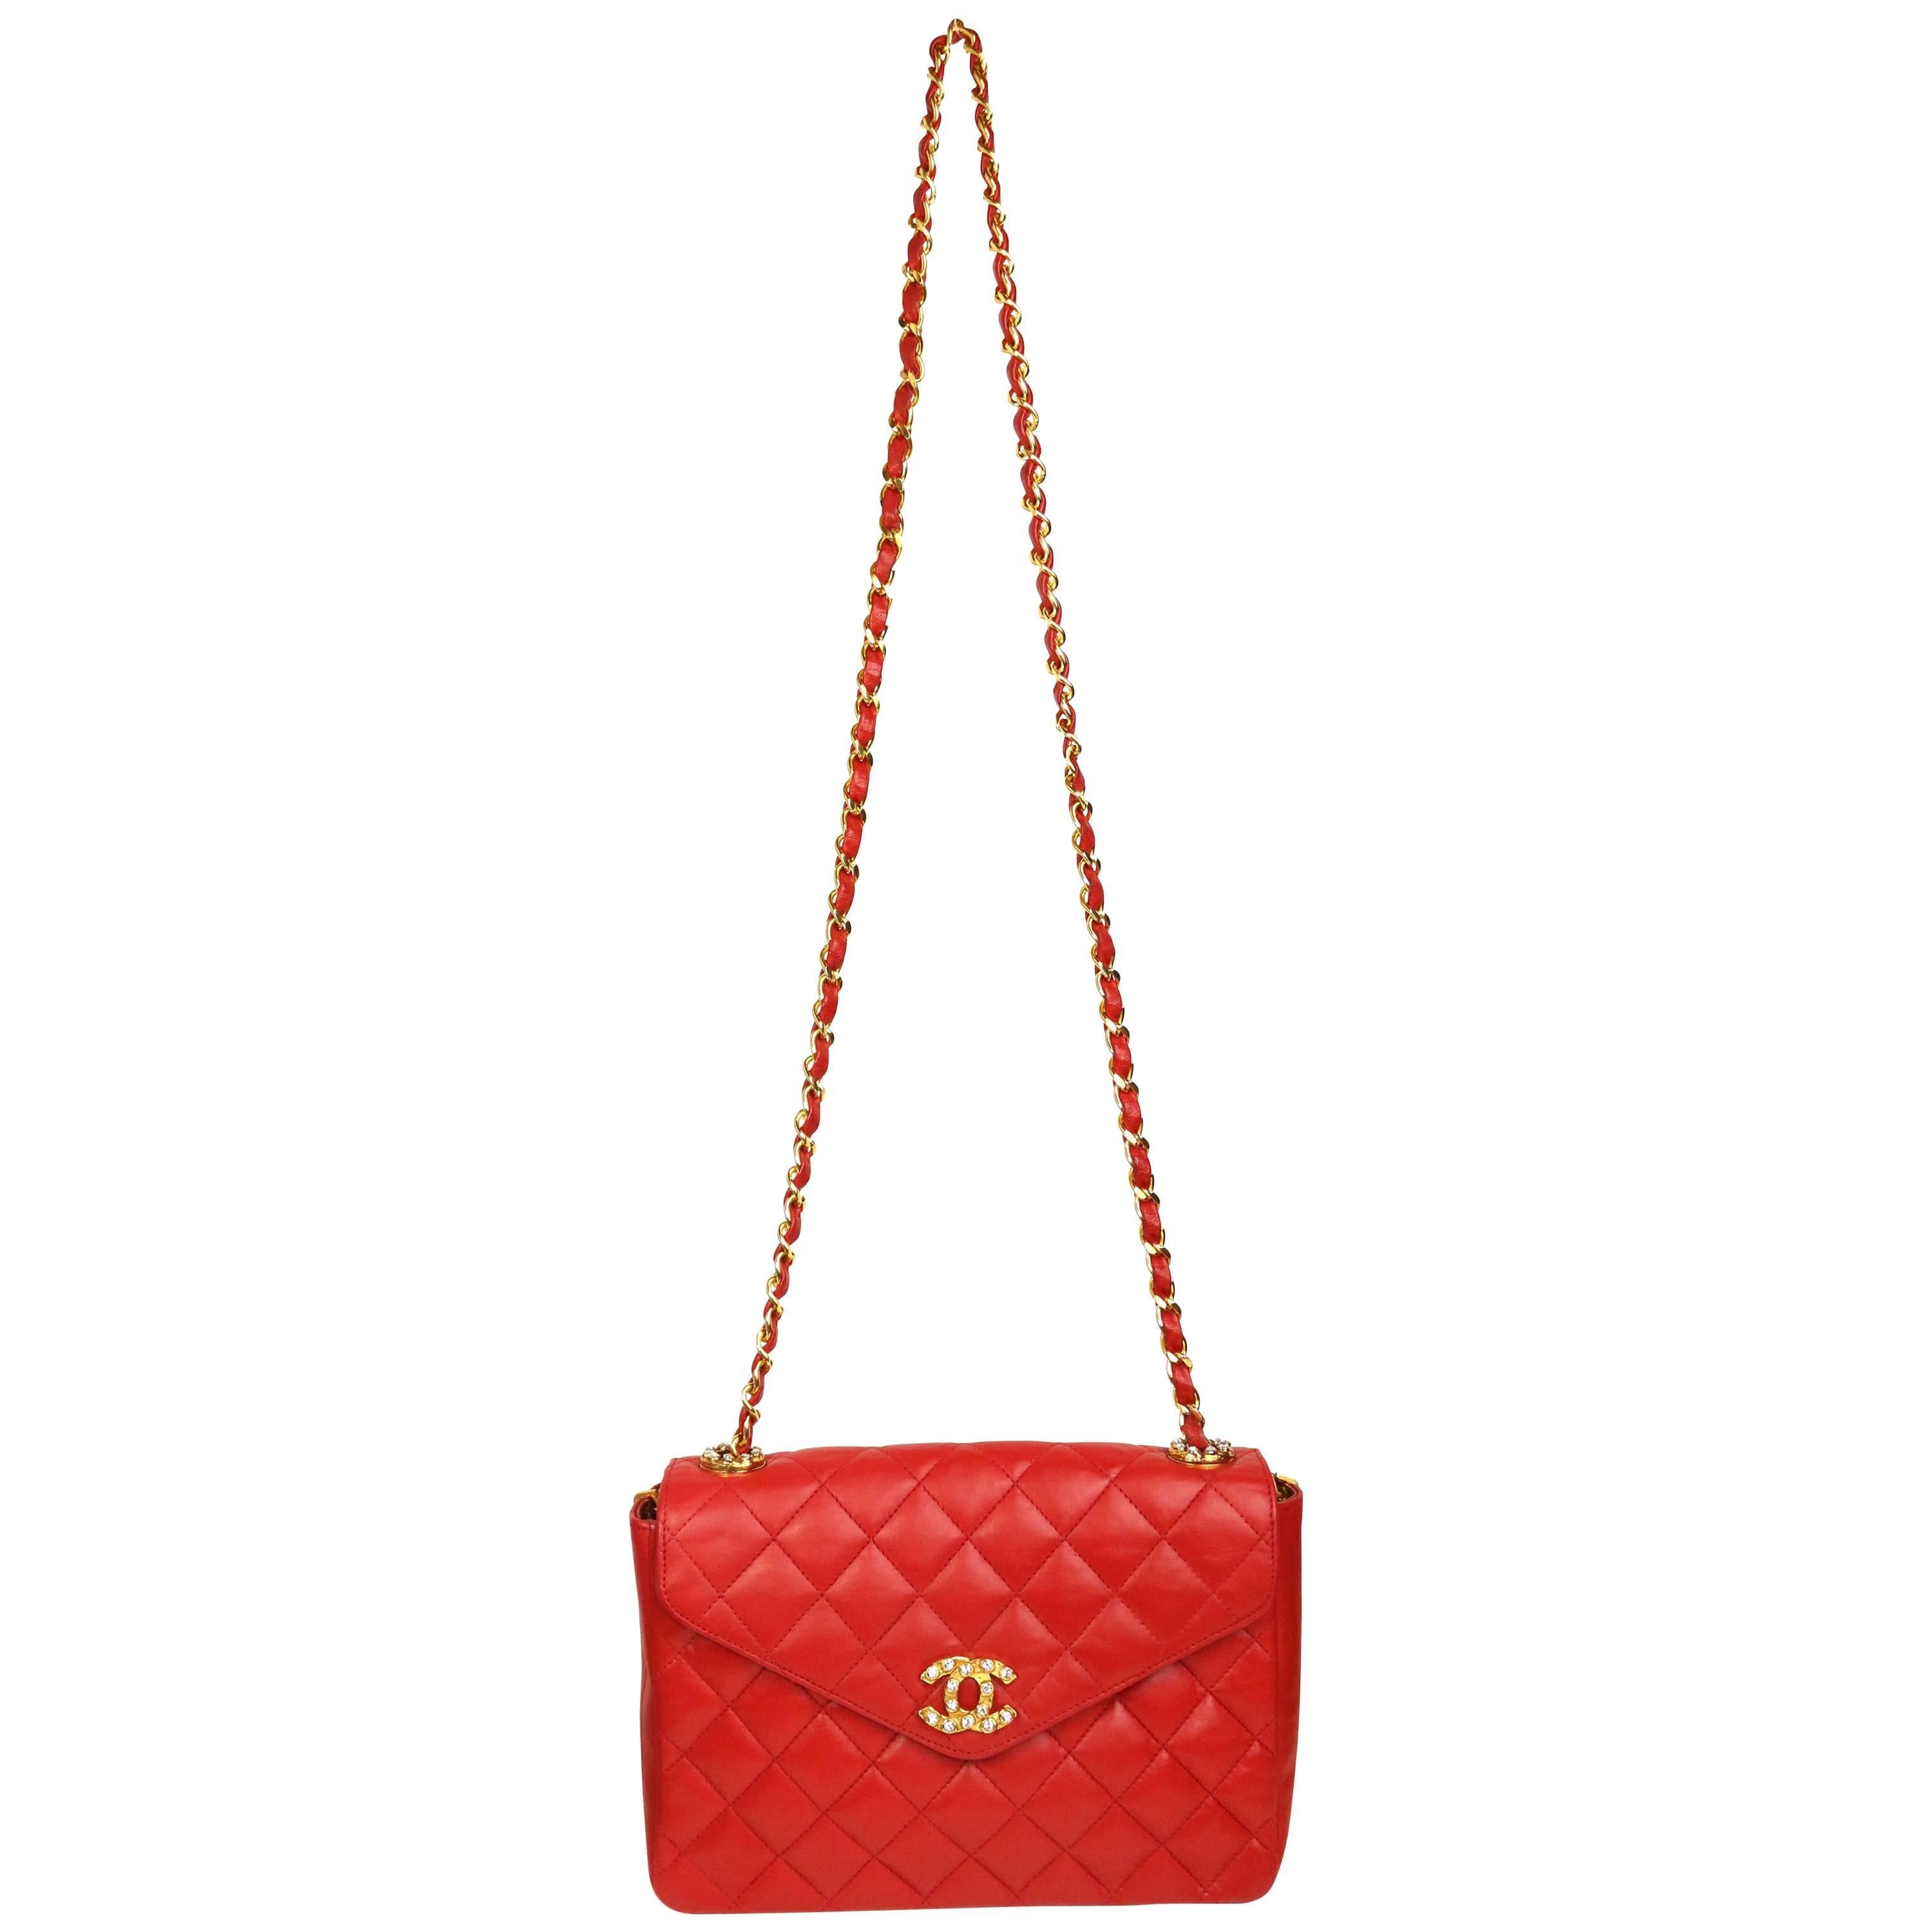 chanel red leather handbag